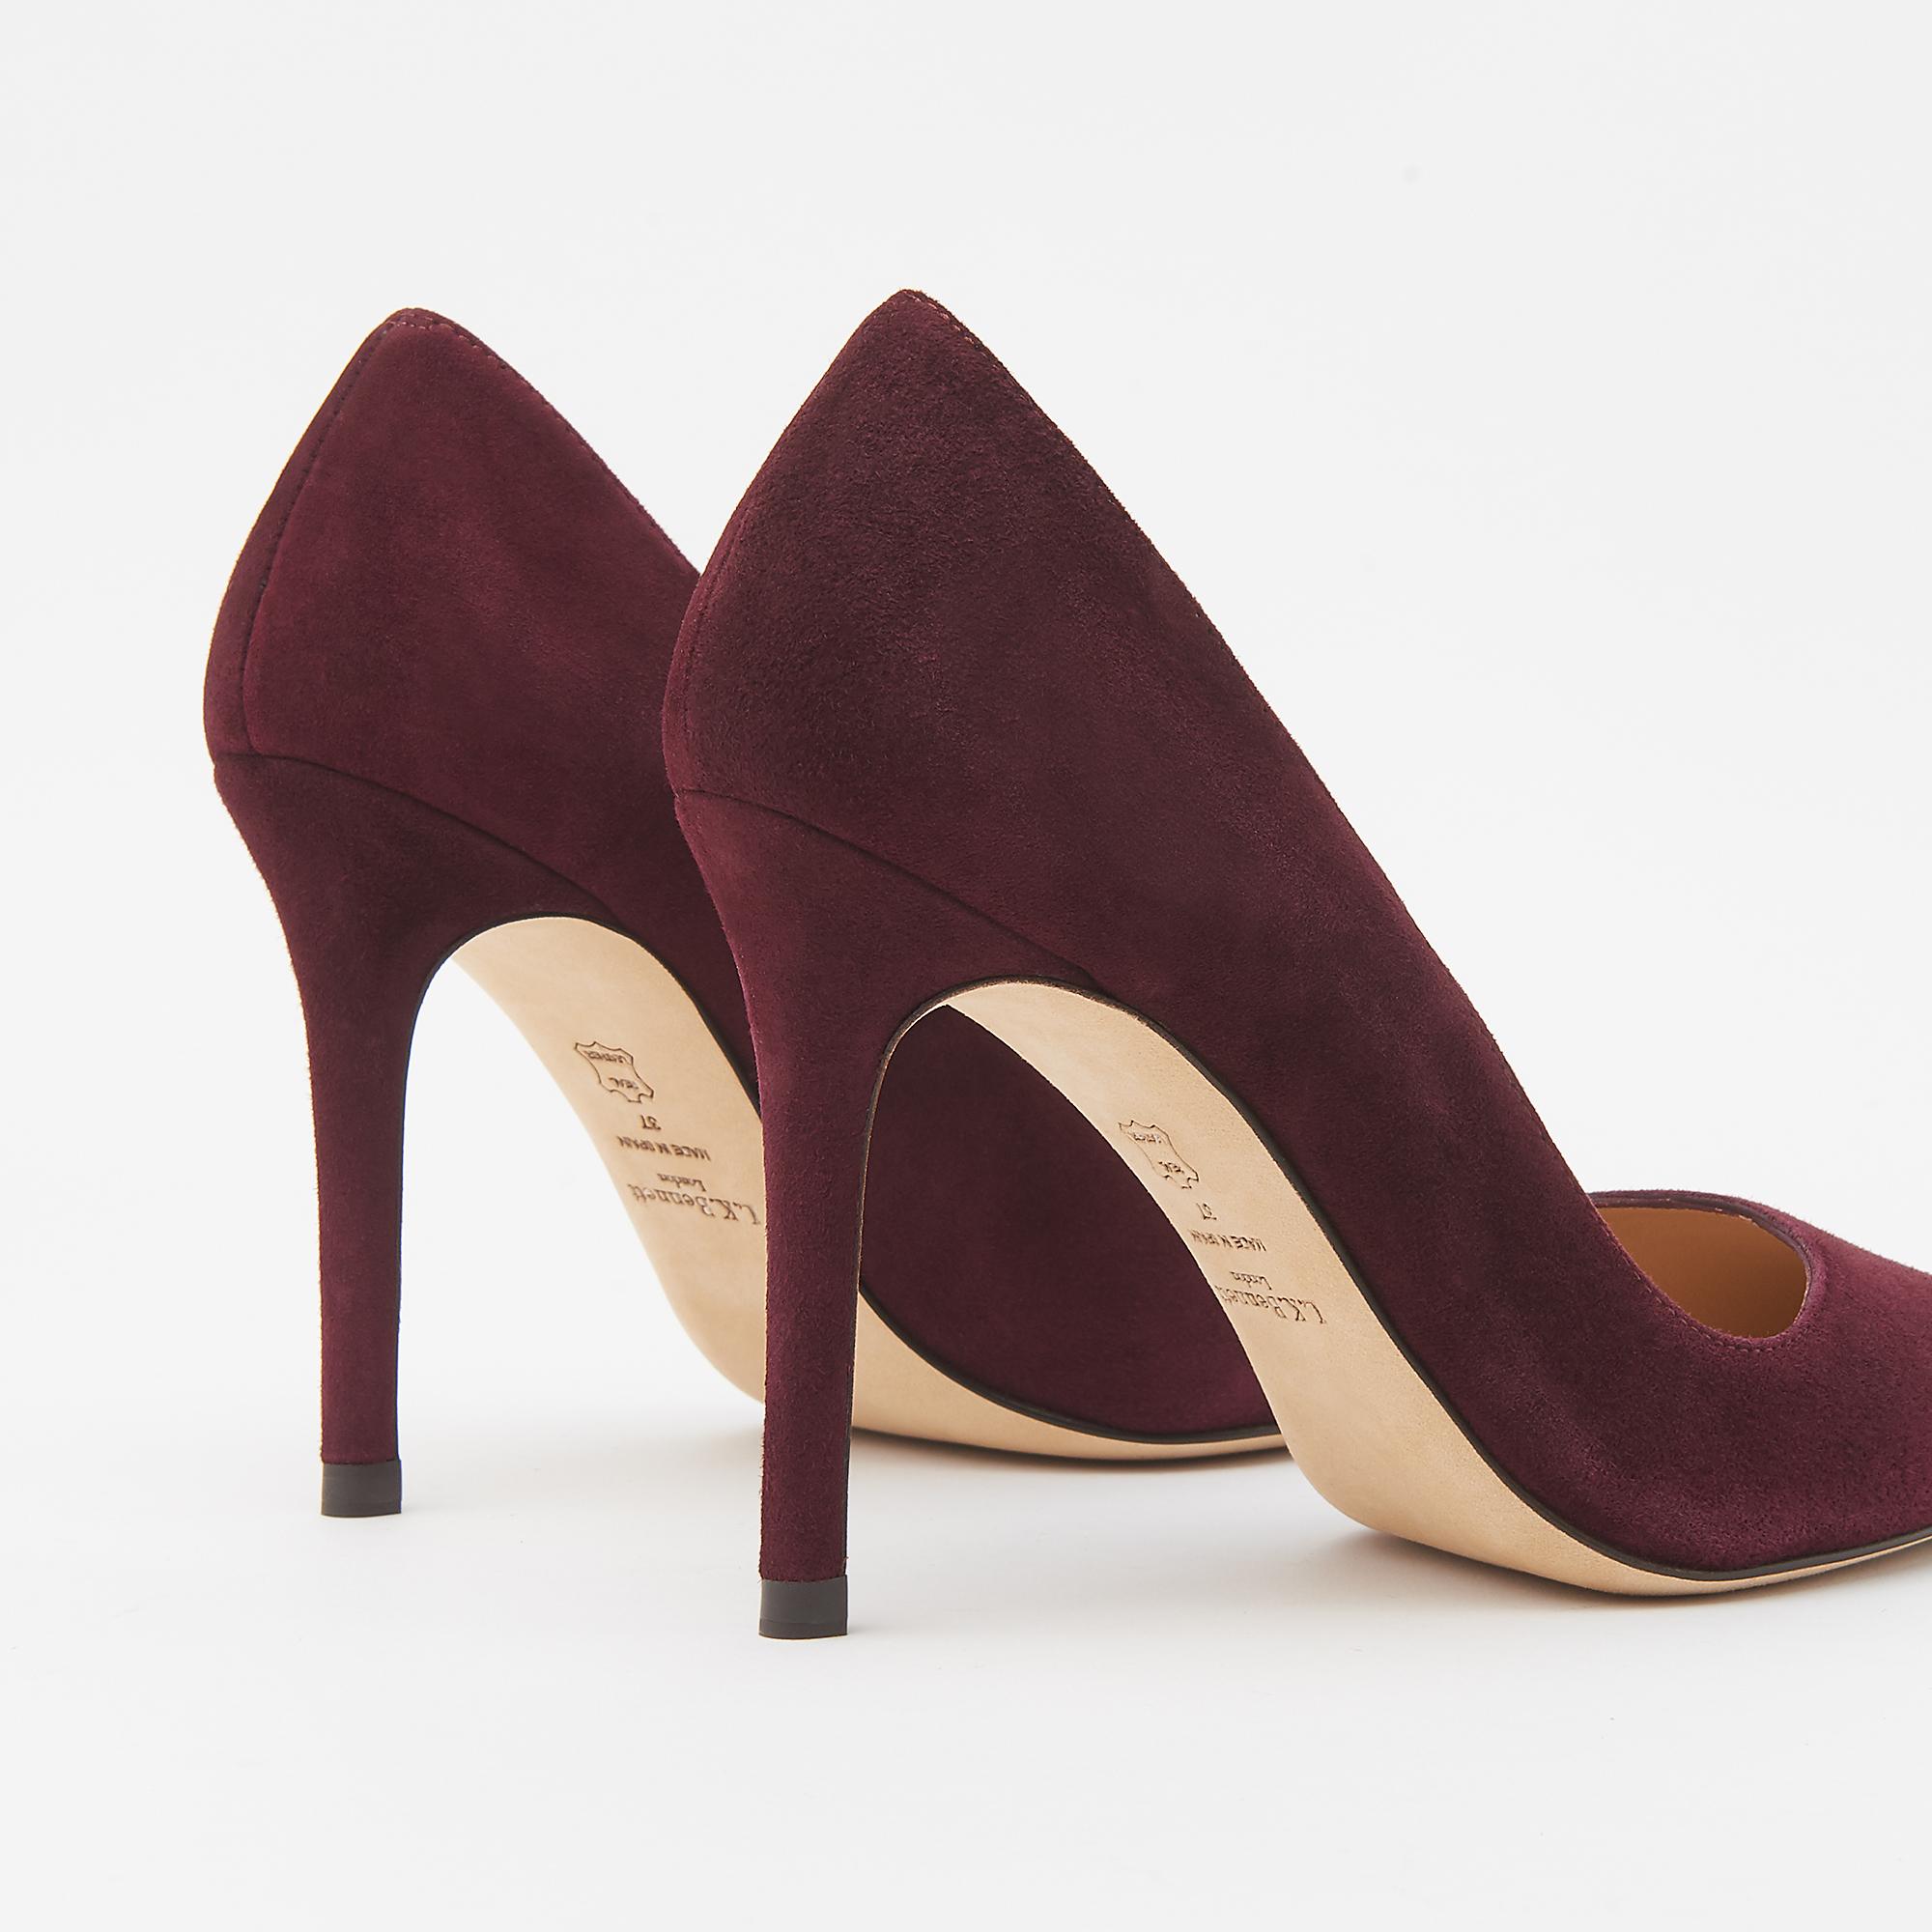 burgundy heels uk